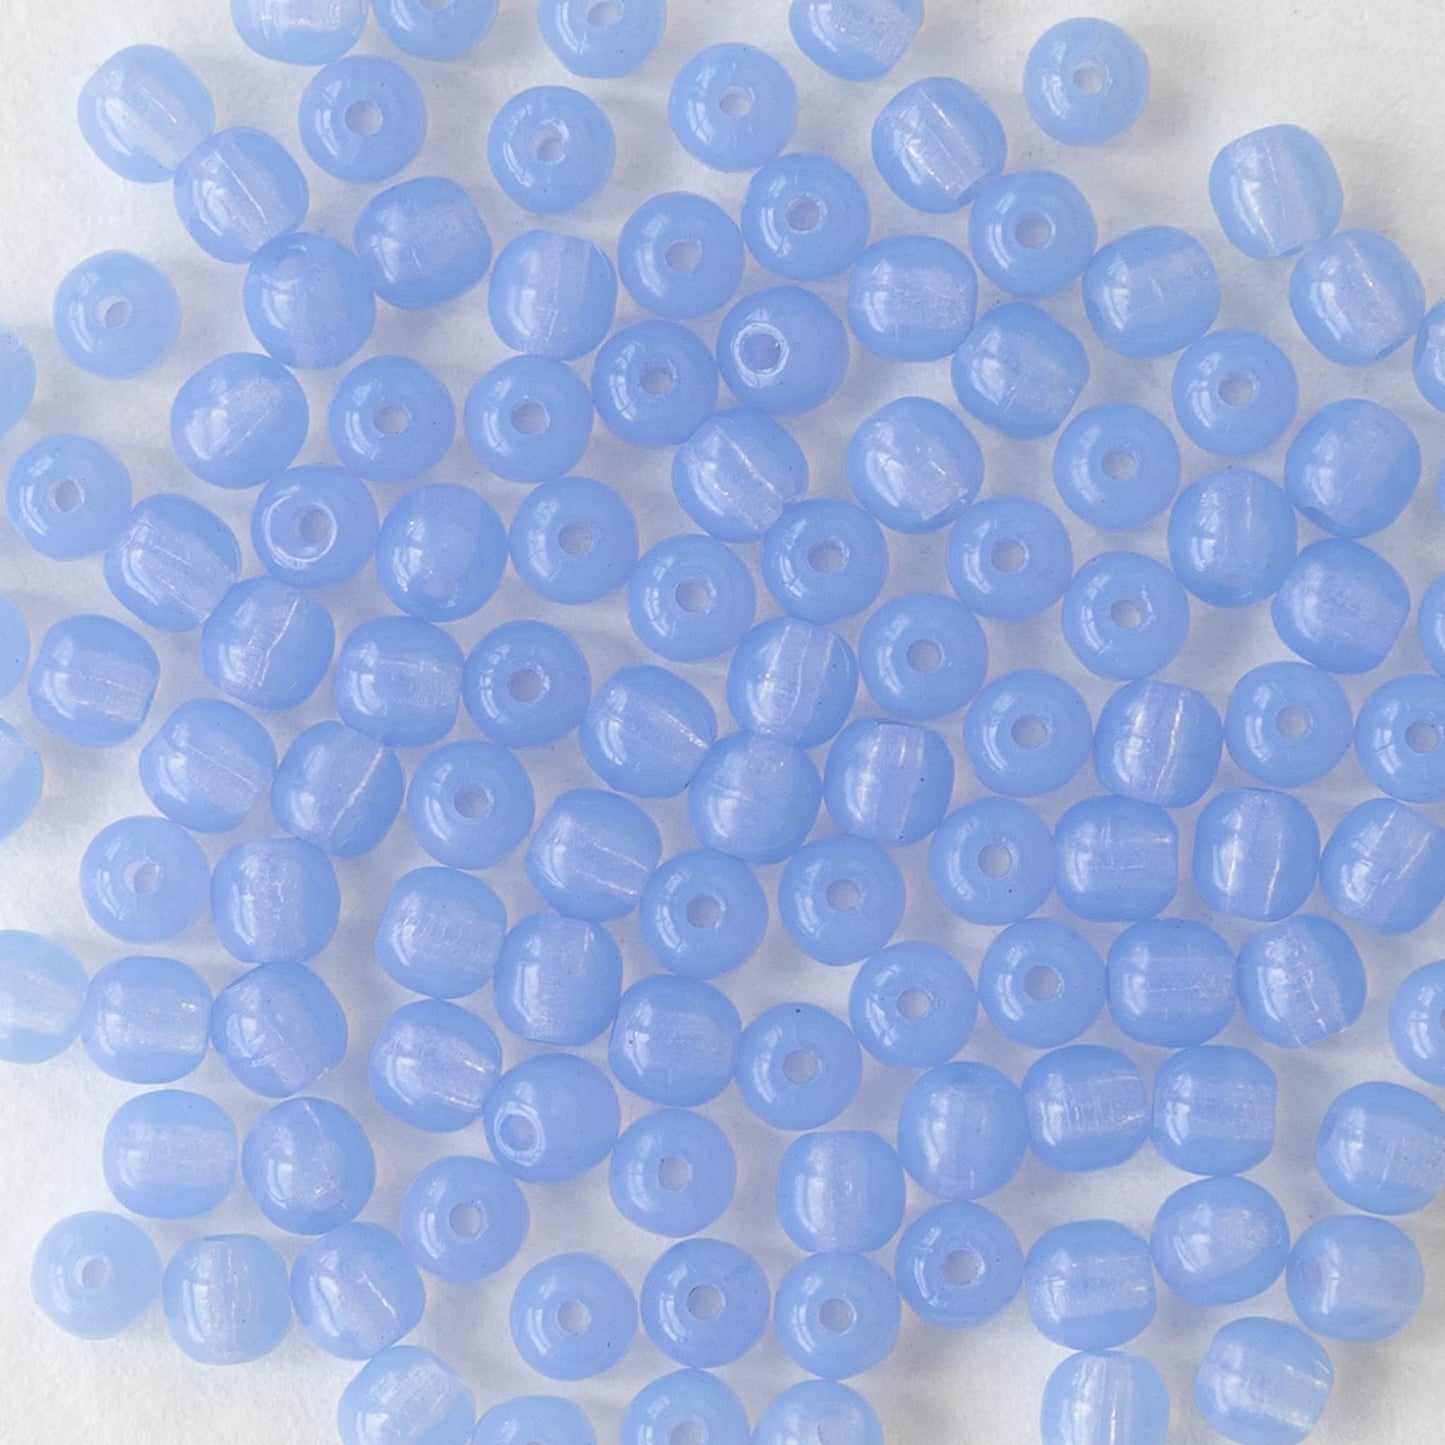 3mm Round Glass Beads - Opaline Sky Blue - 120